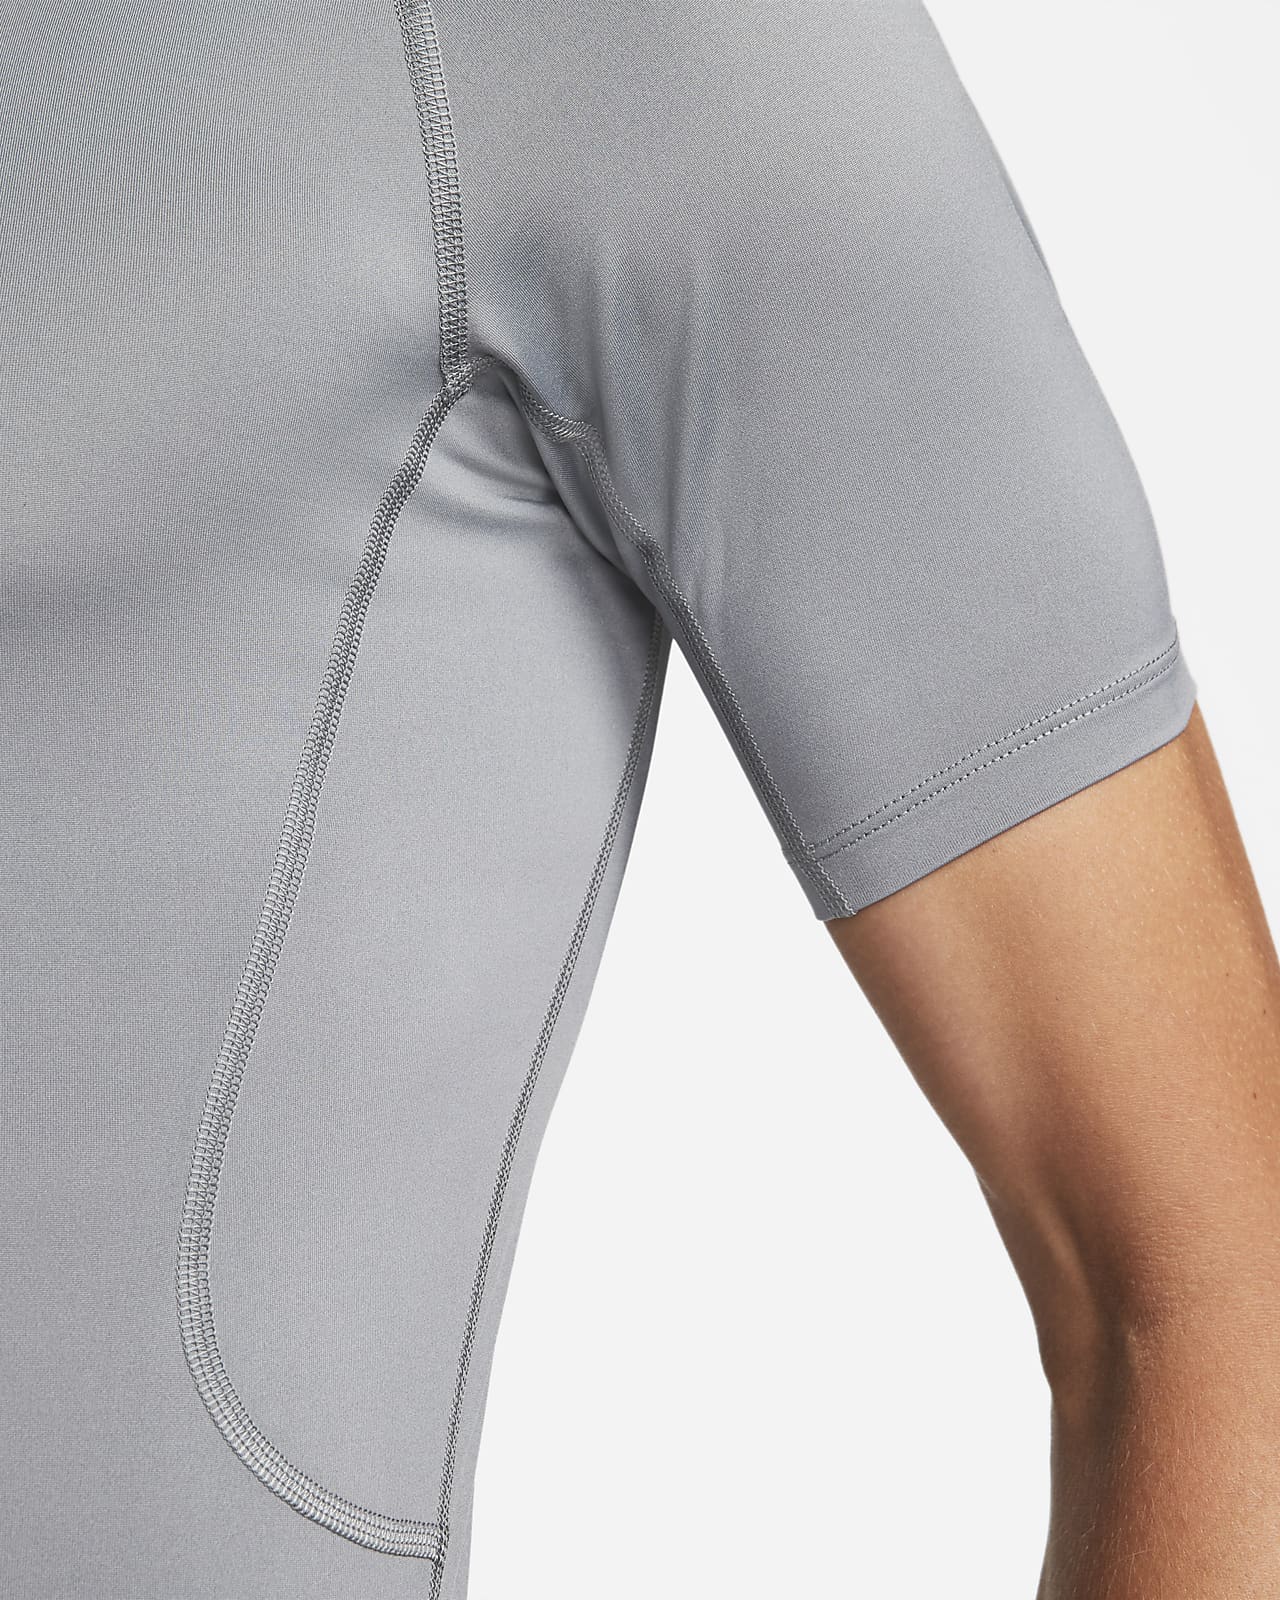 Mens compression short sleeve shirt Nike PRO grey